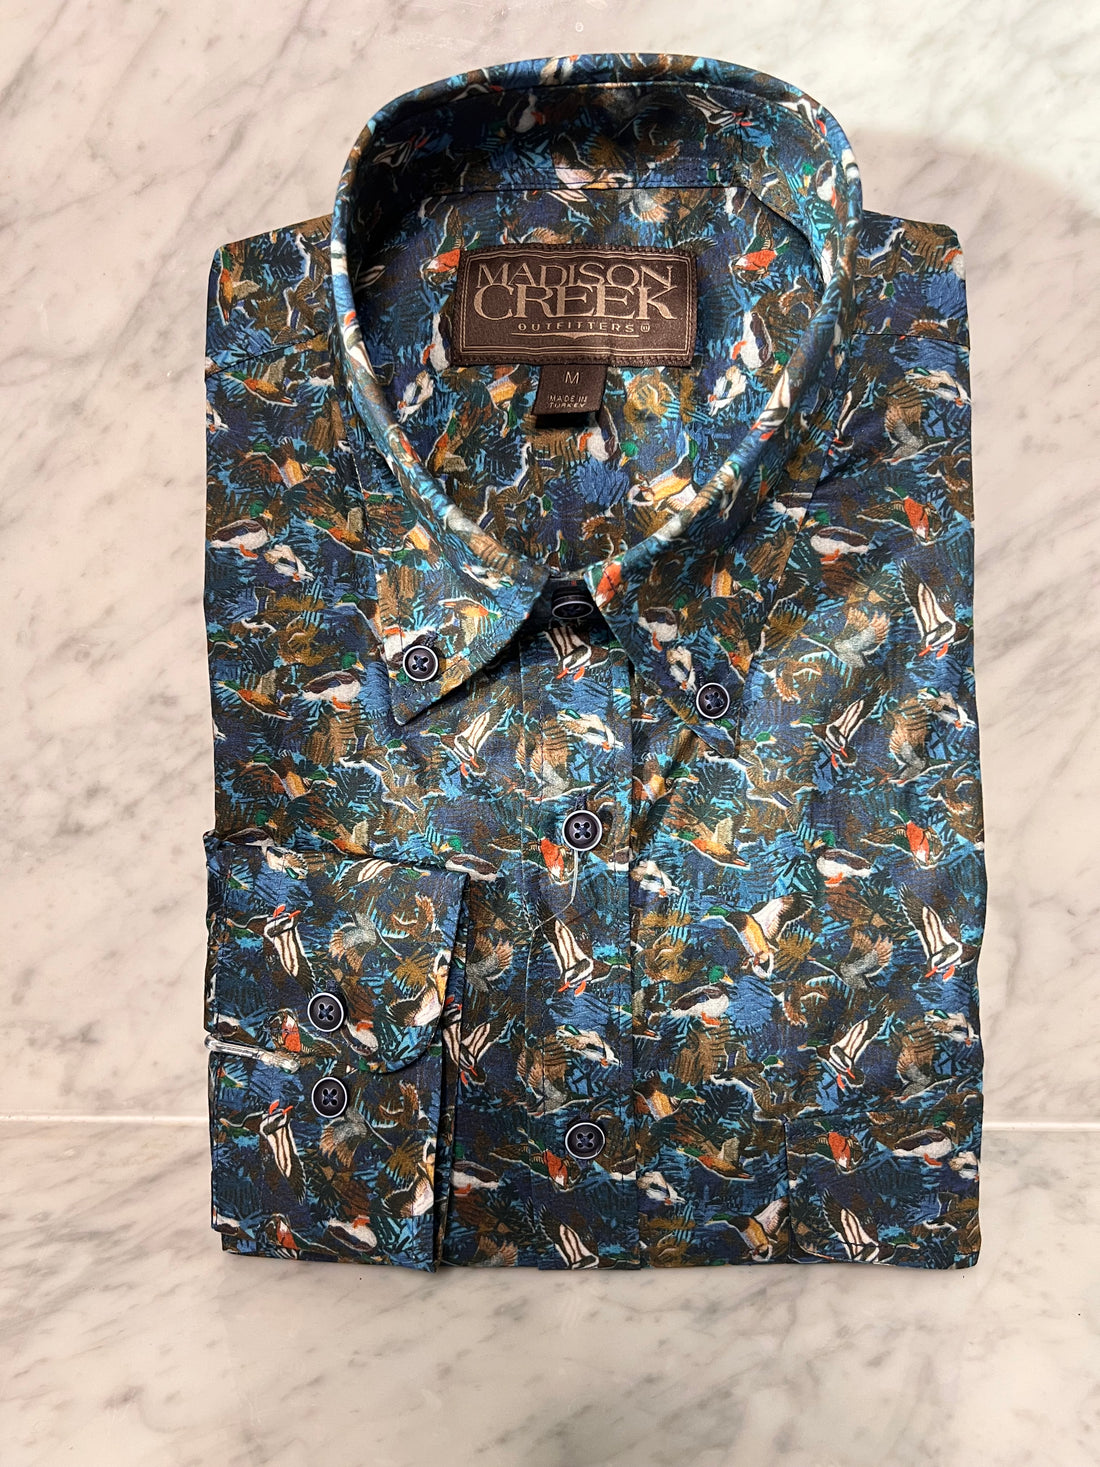 Madison Creek Outfitters Blue Ridge Shirt